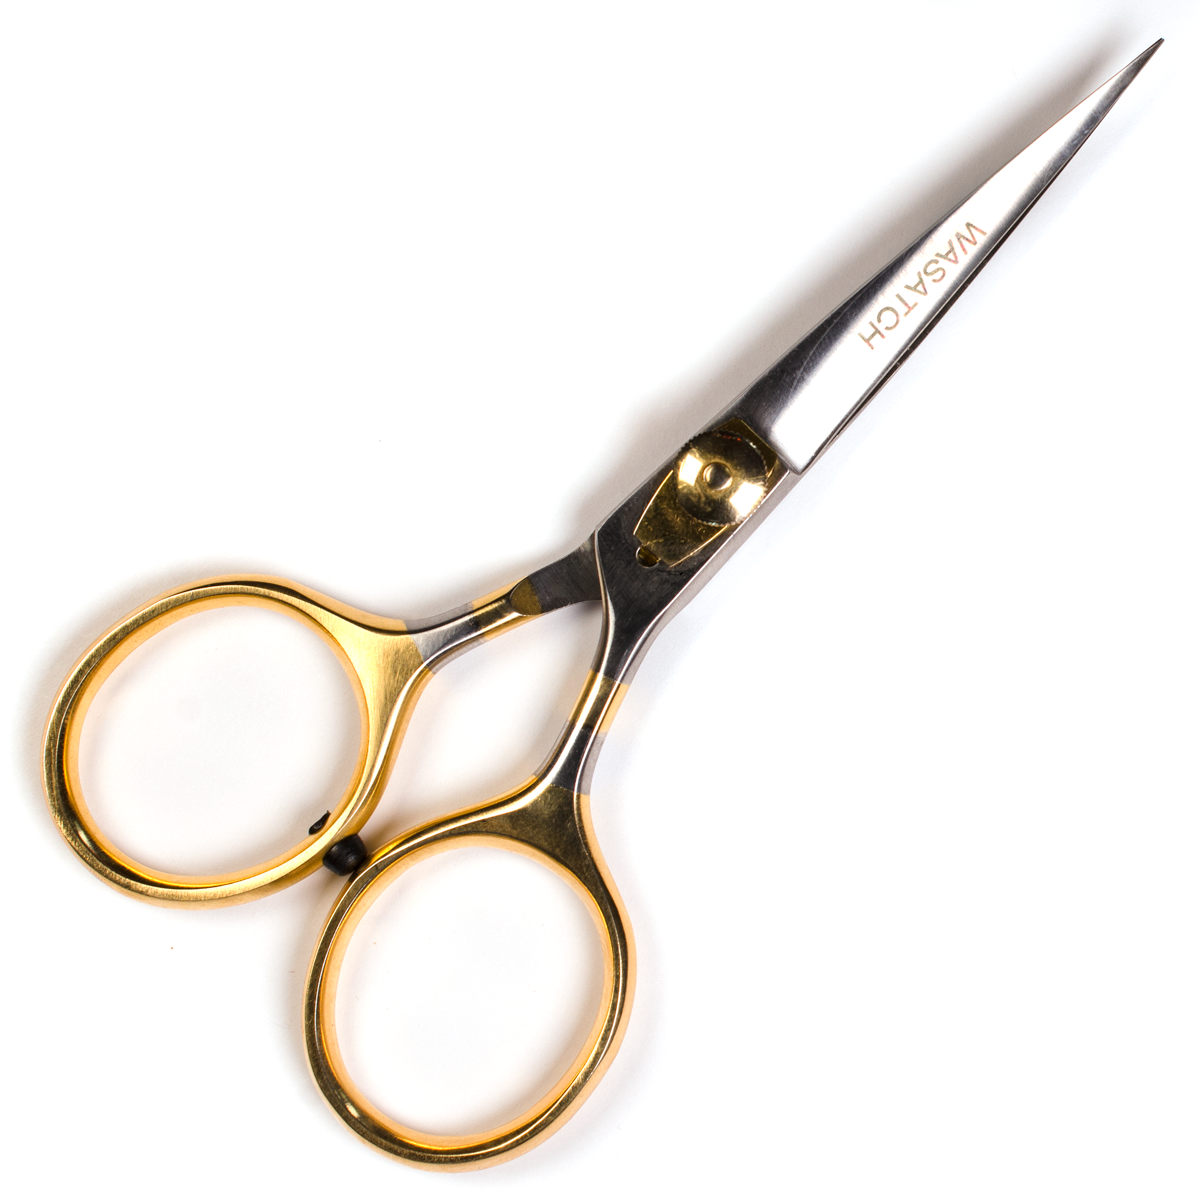 2.5 Inch Straight Scissors